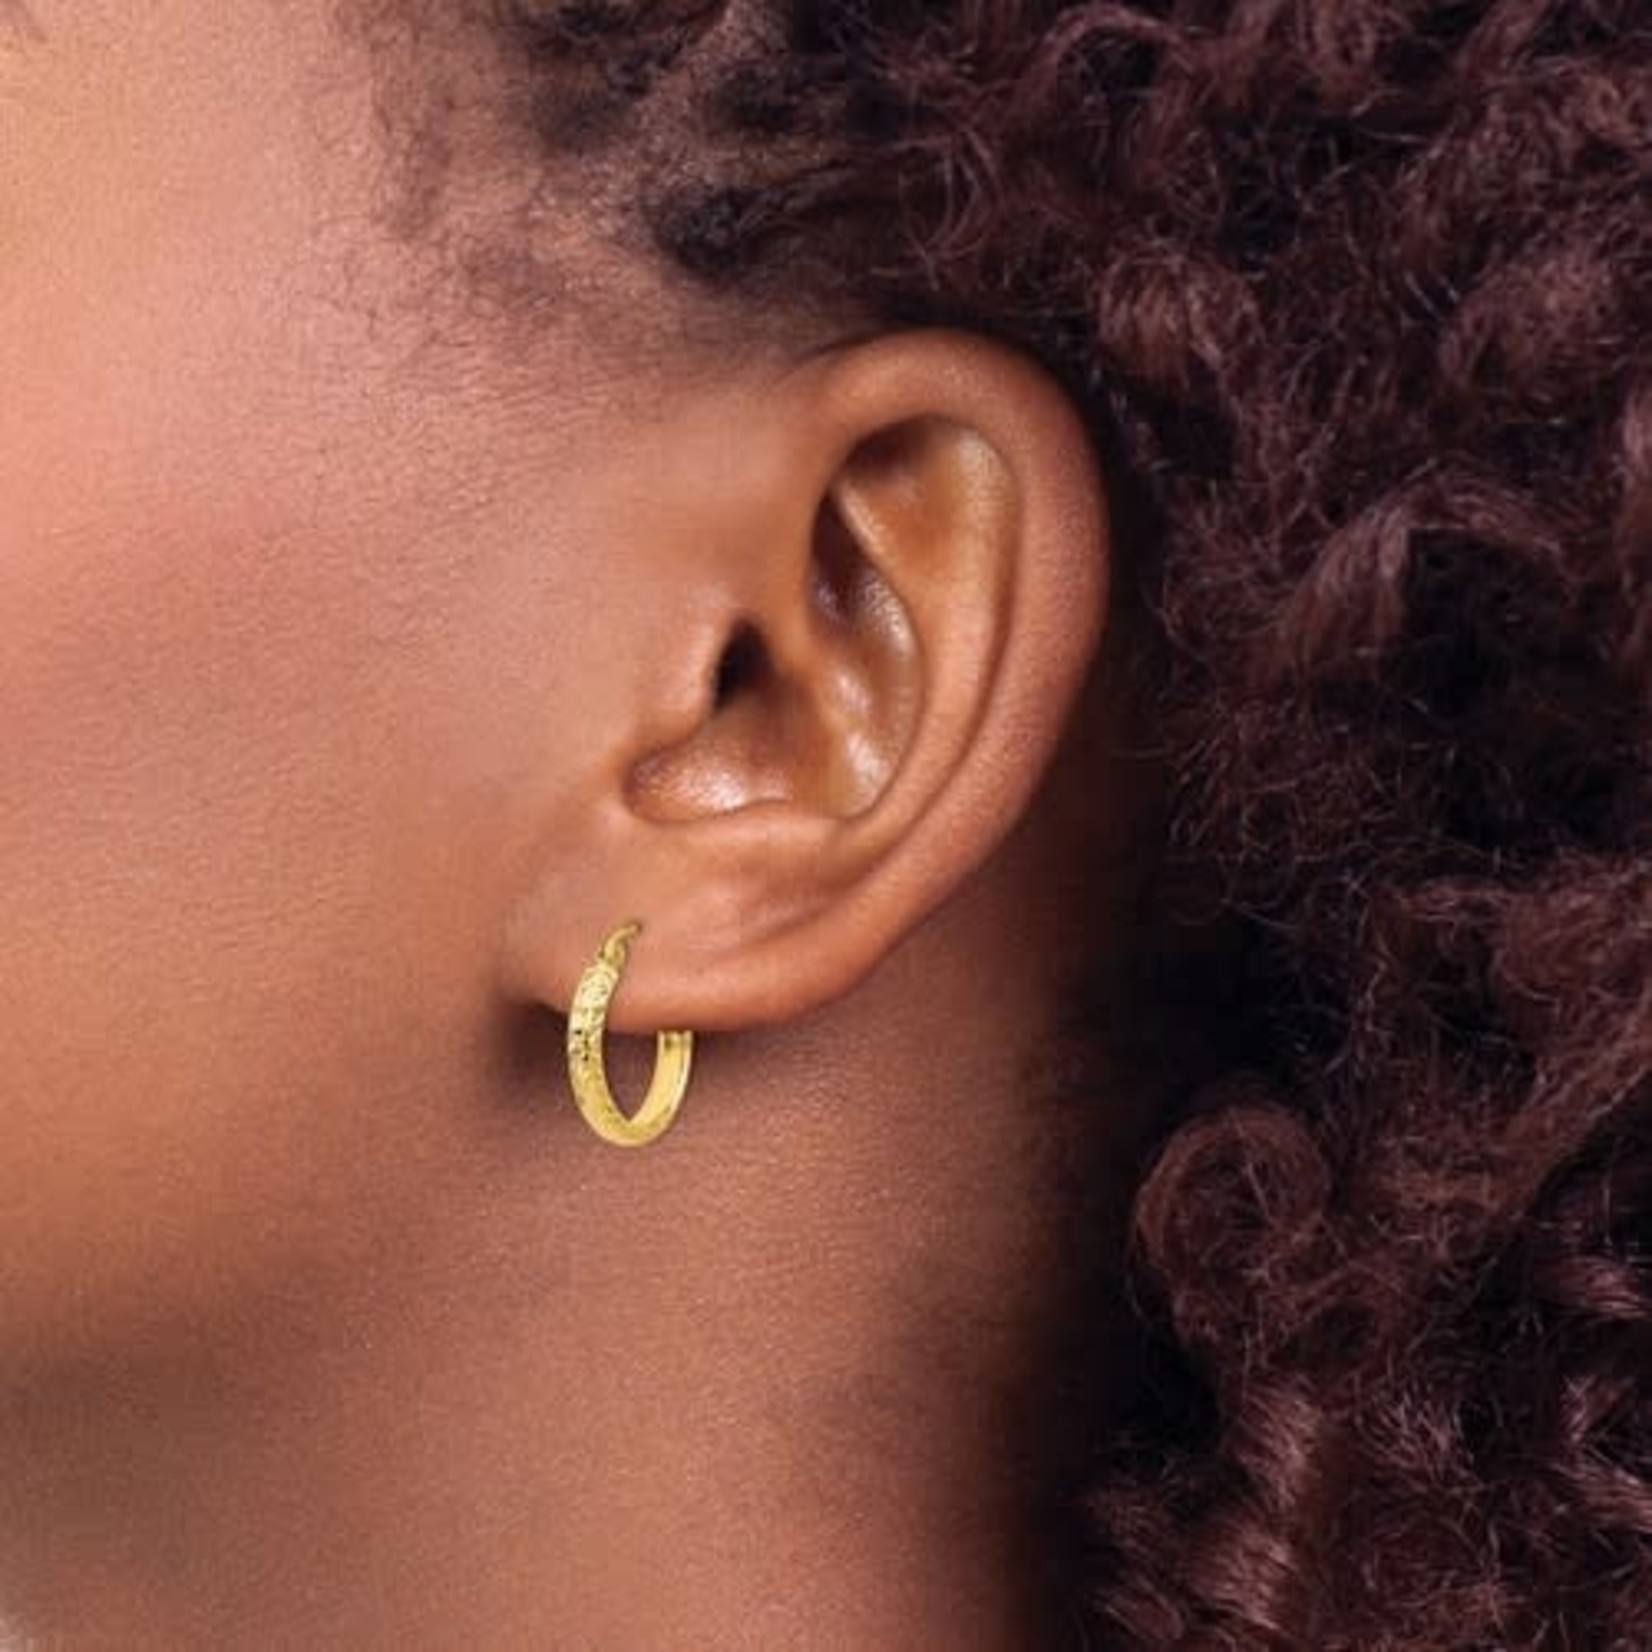 QUALITY GOLD OF CINCINNATI INC 14K 2.8x15mm Diamond Cut Hoop Earrings